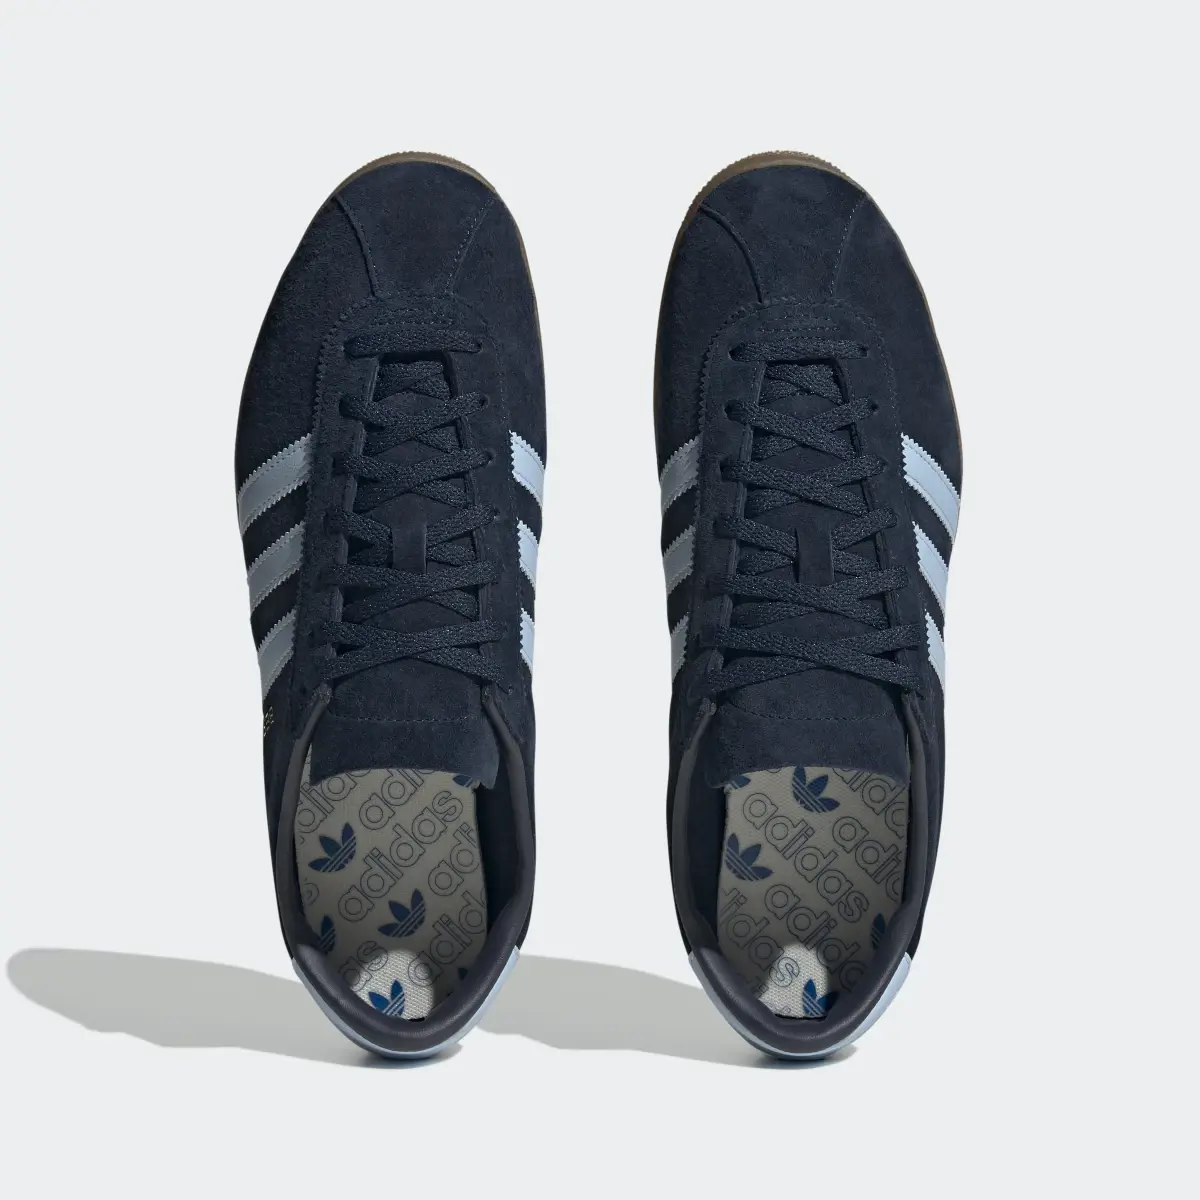 Adidas Berlin Shoes. 3